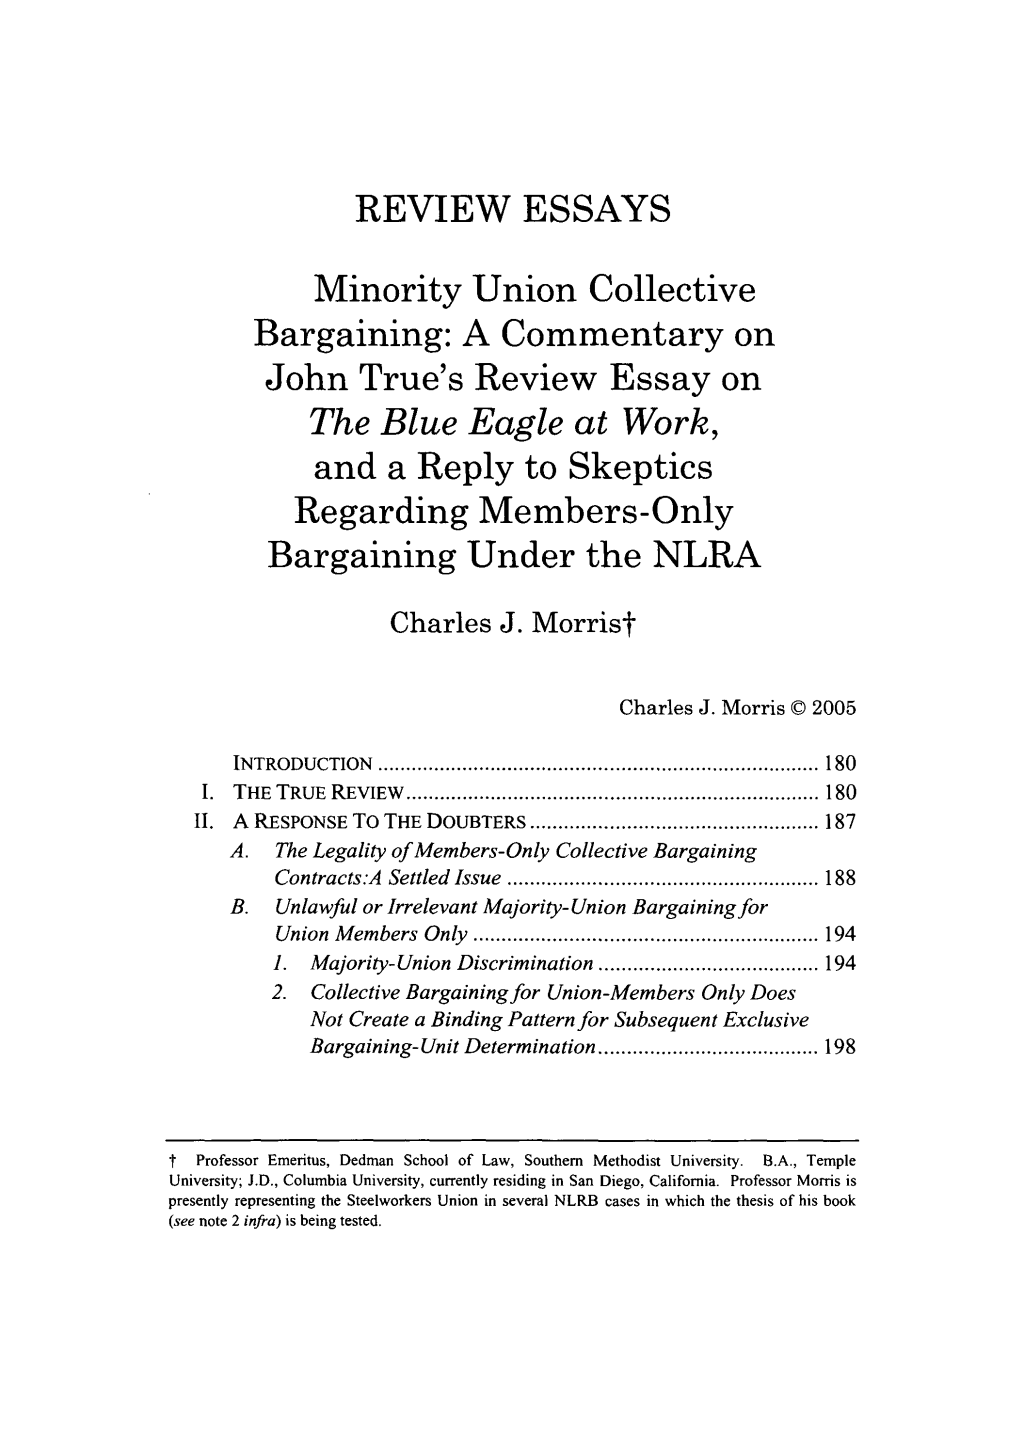 Minority Union Collective Bargaining